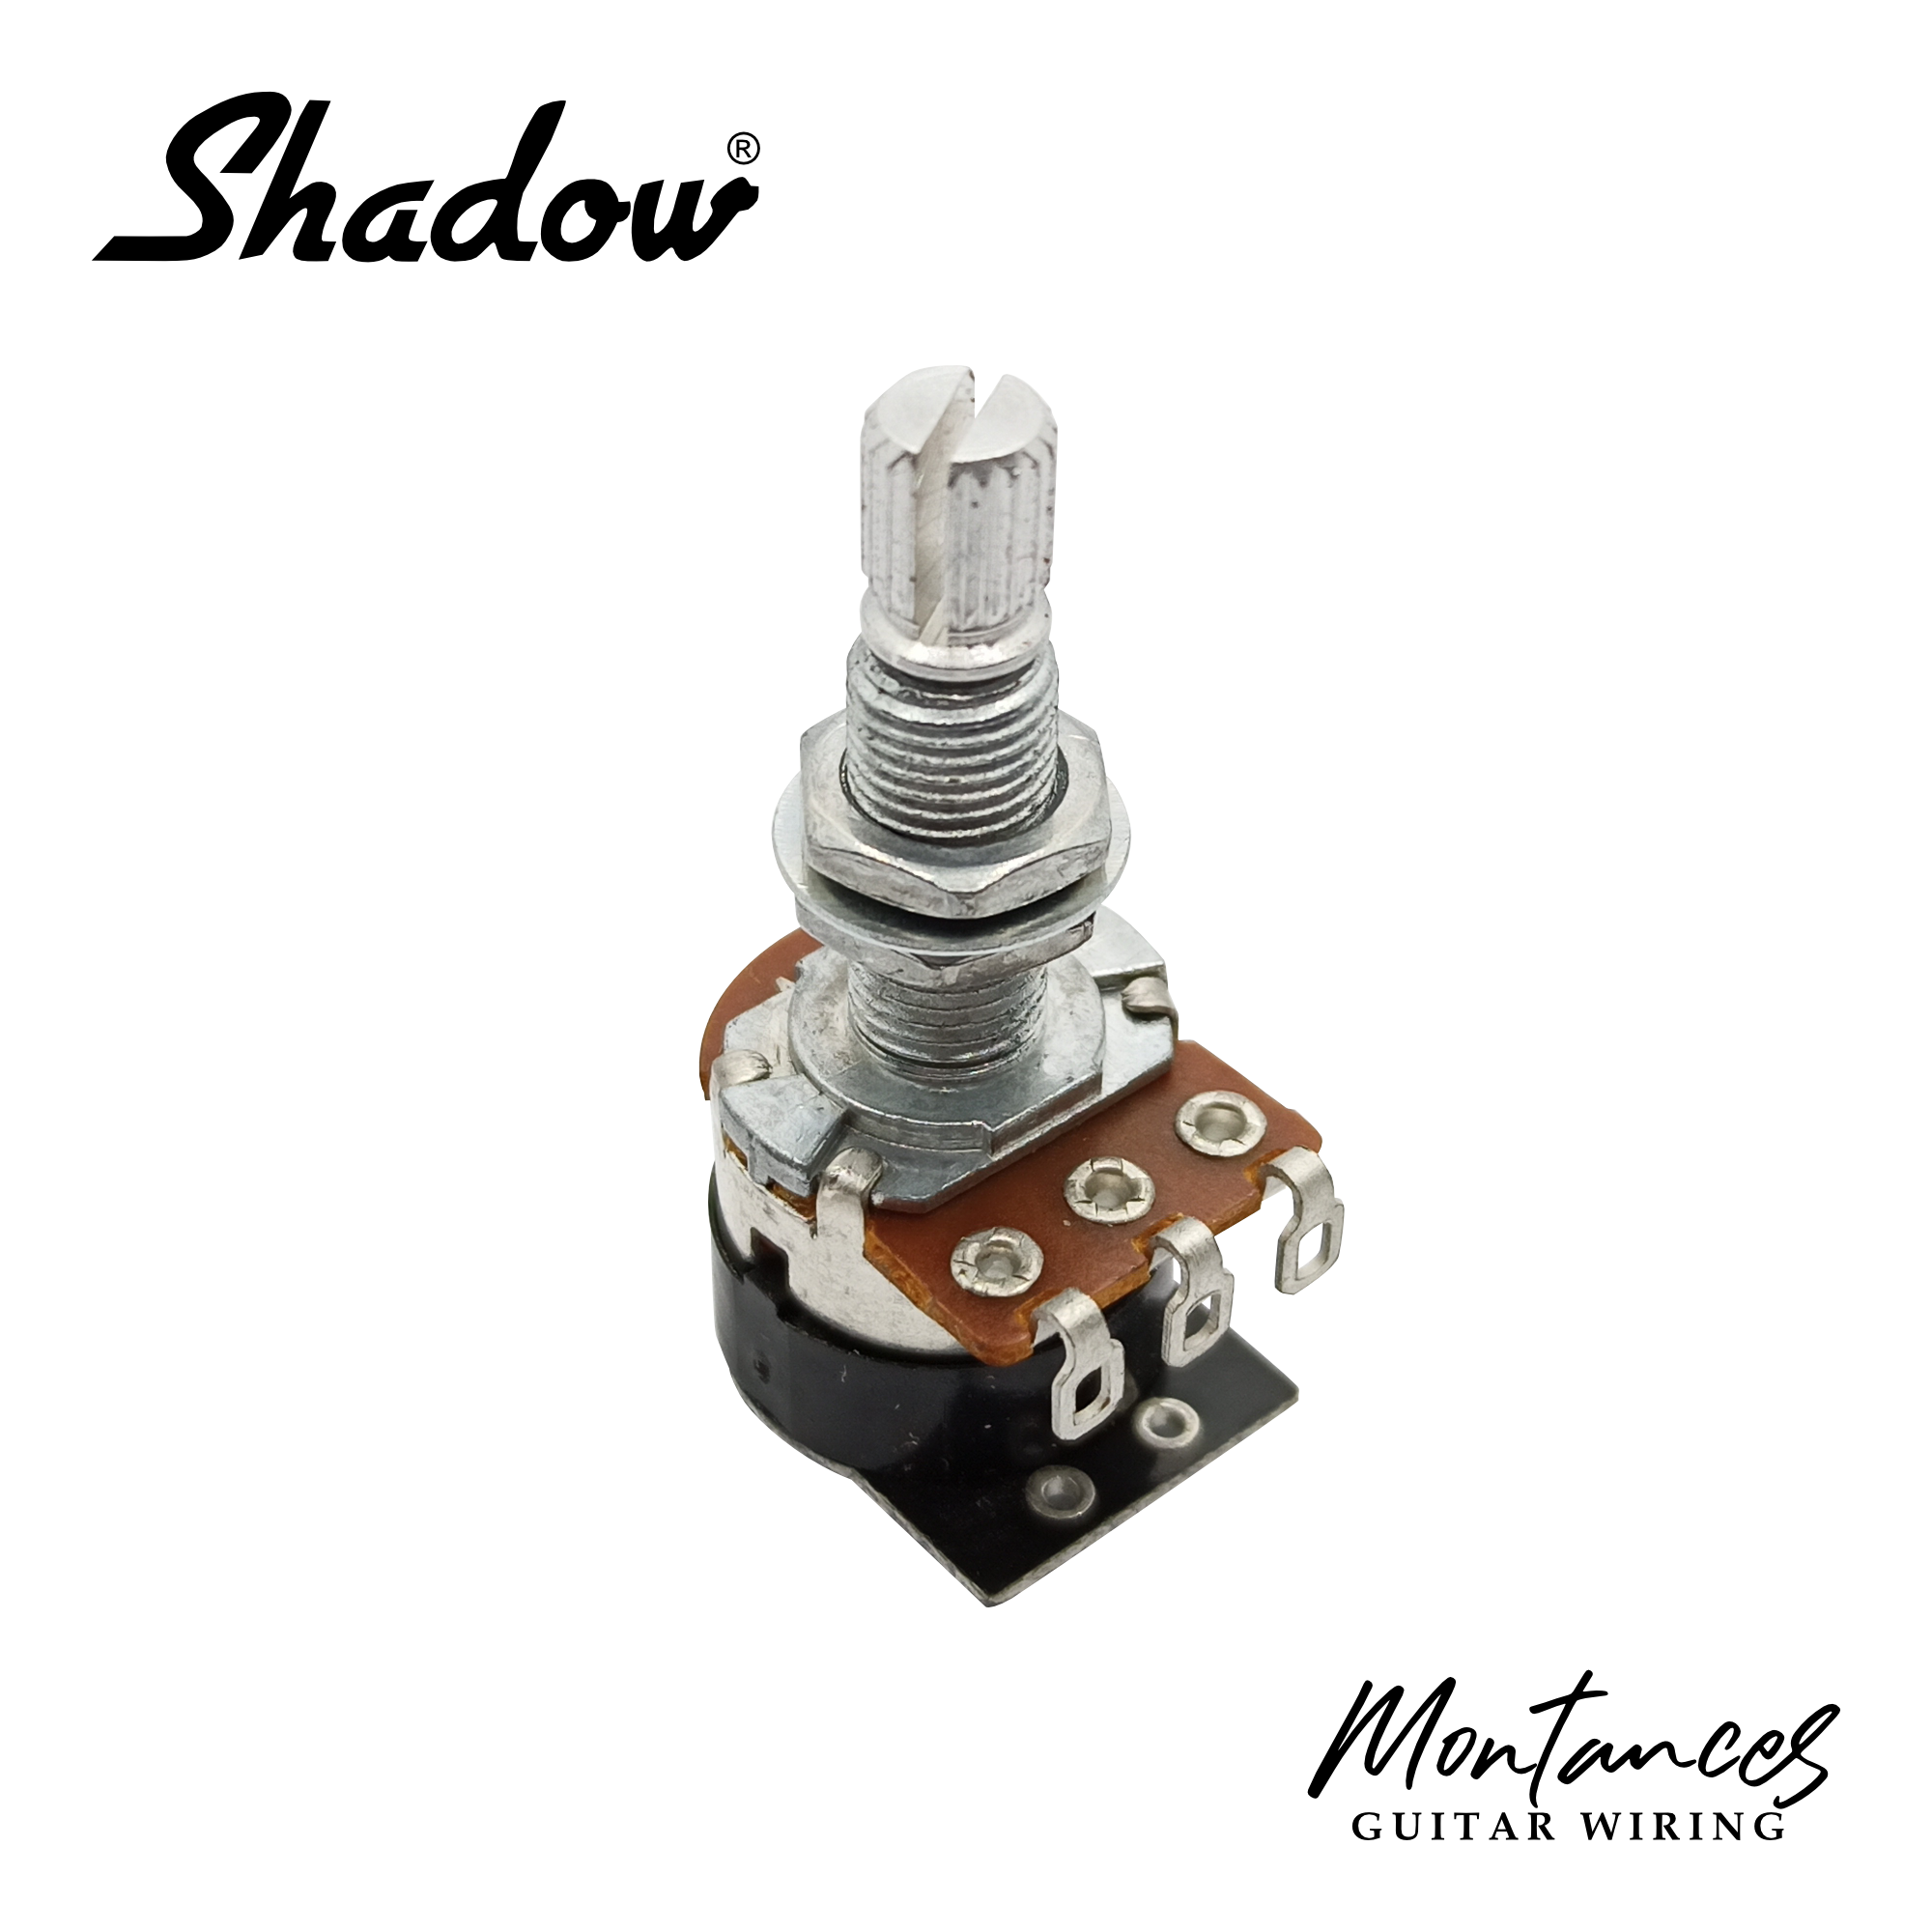 Shadow® Kill Pot 2-in-1 function ⅝” Semi-Long Length Potentiometer and Kill Switch